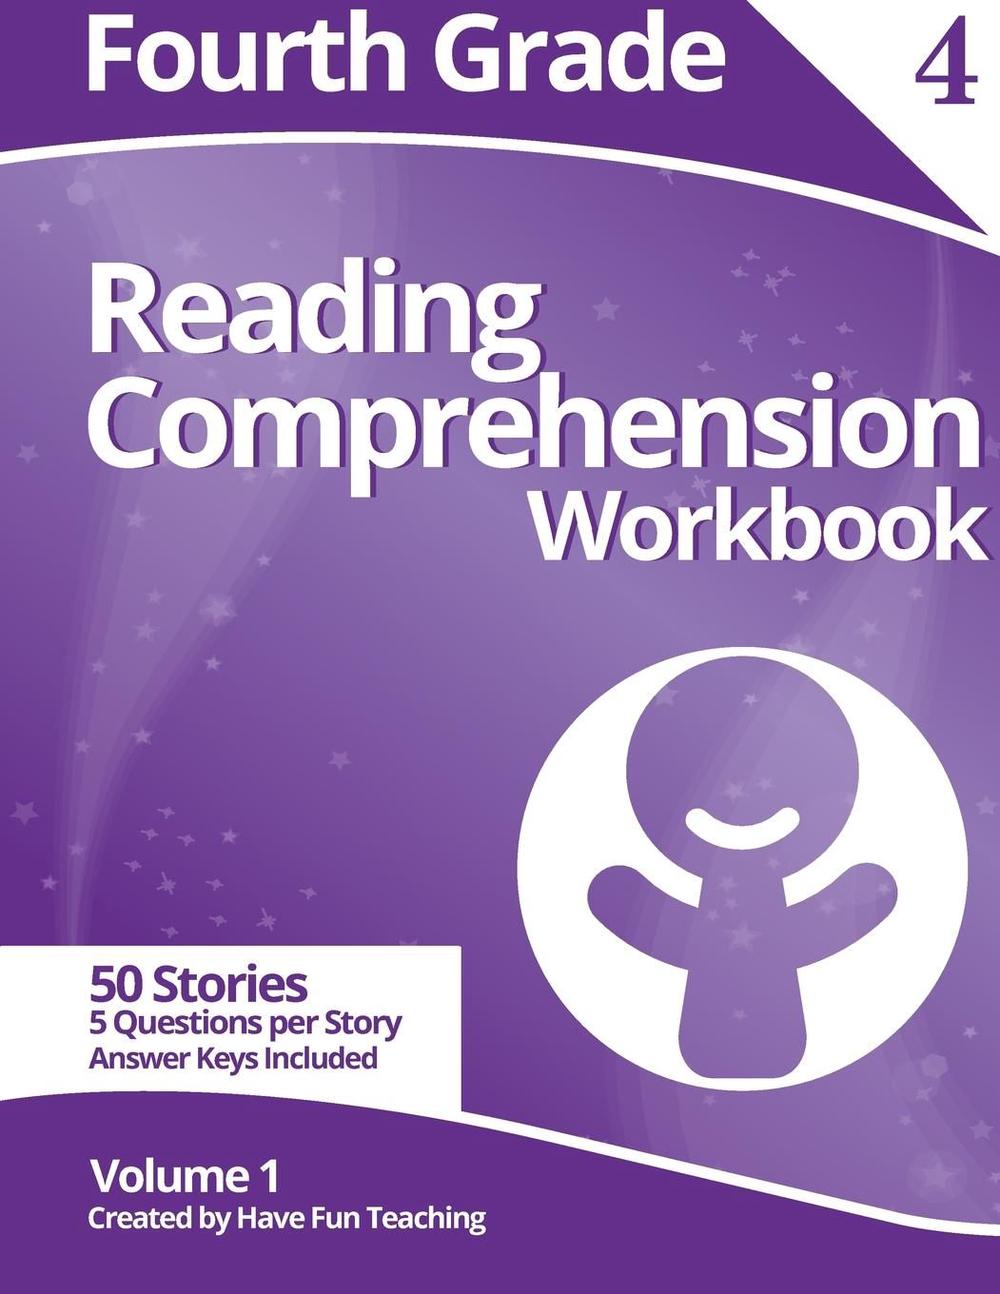 Fourth Grade Reading Comprehension Workbook: Volume 1 by Have Fun